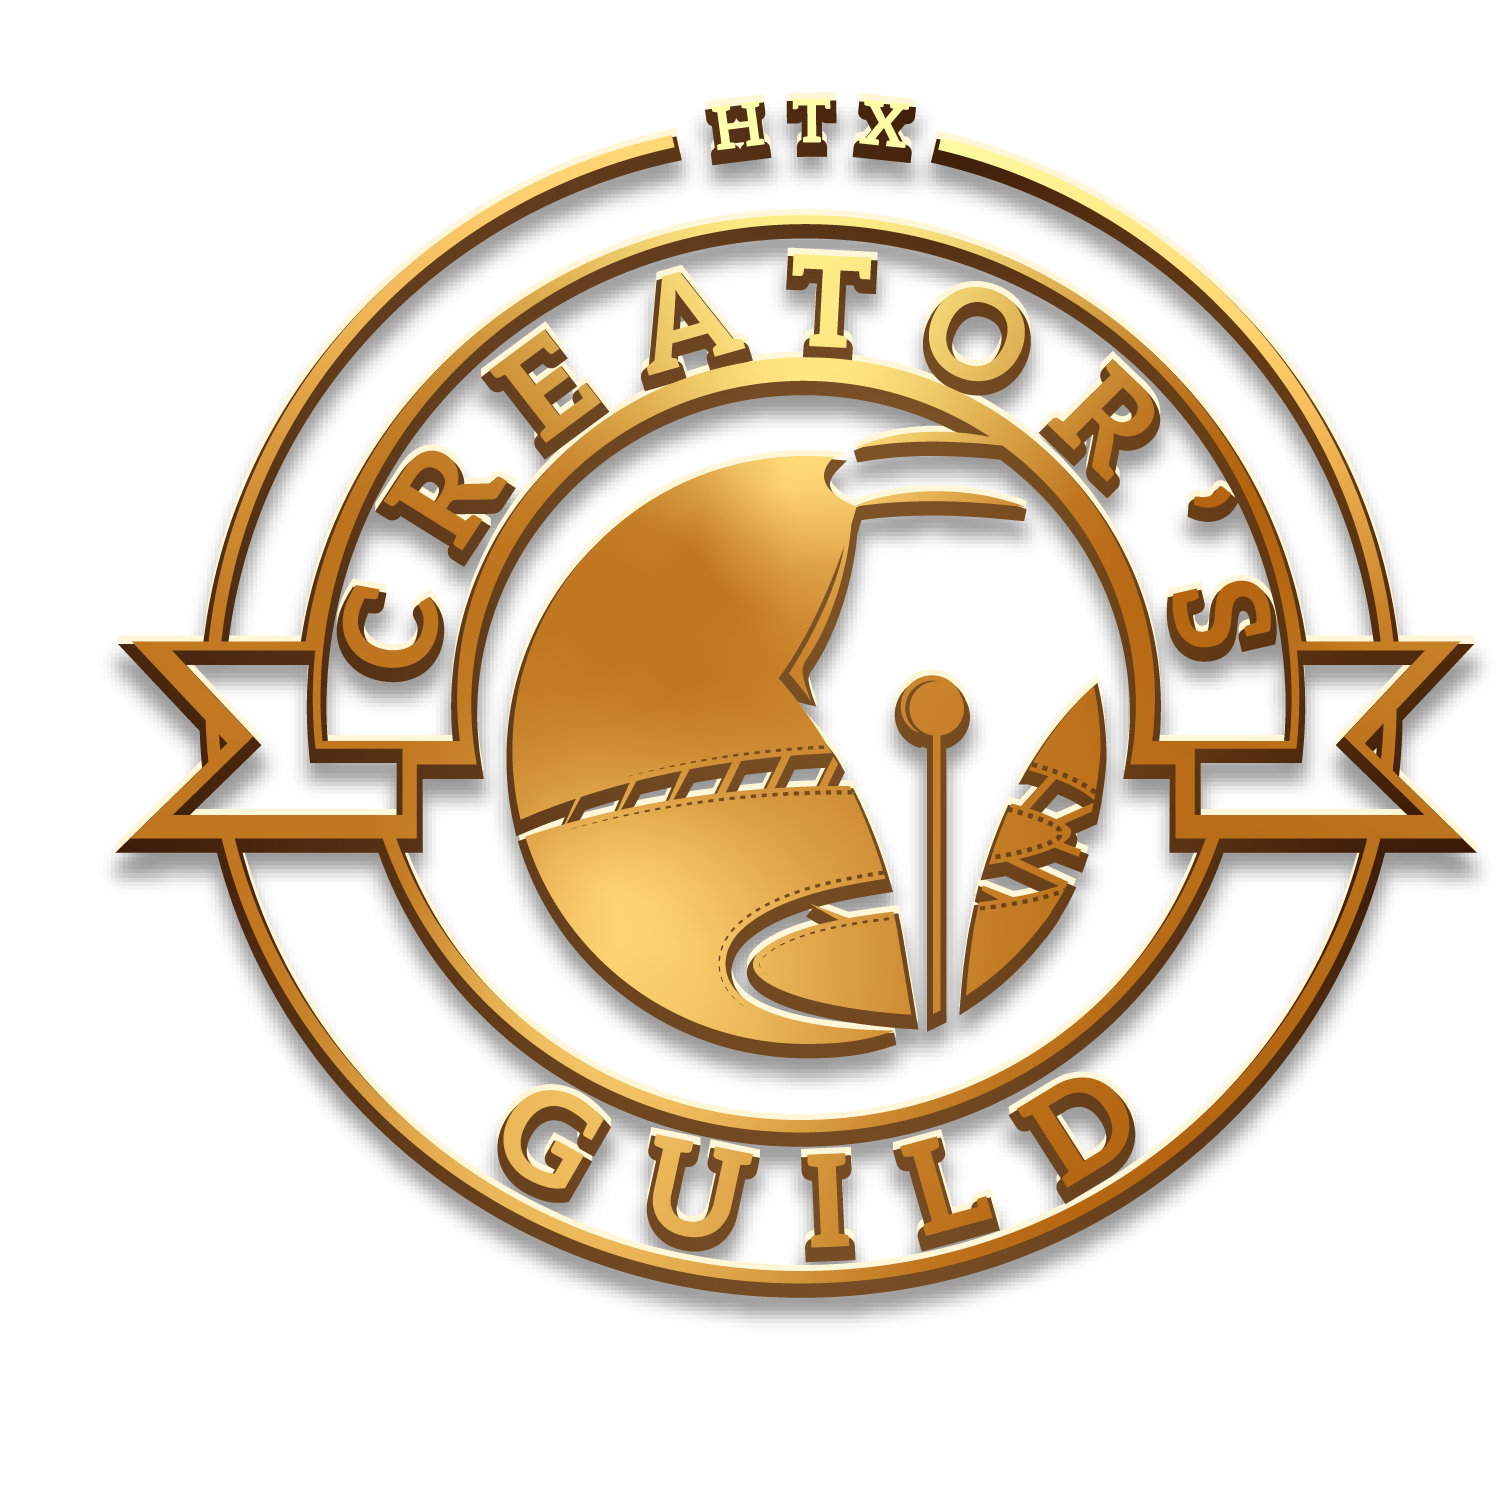 The Guild HTX